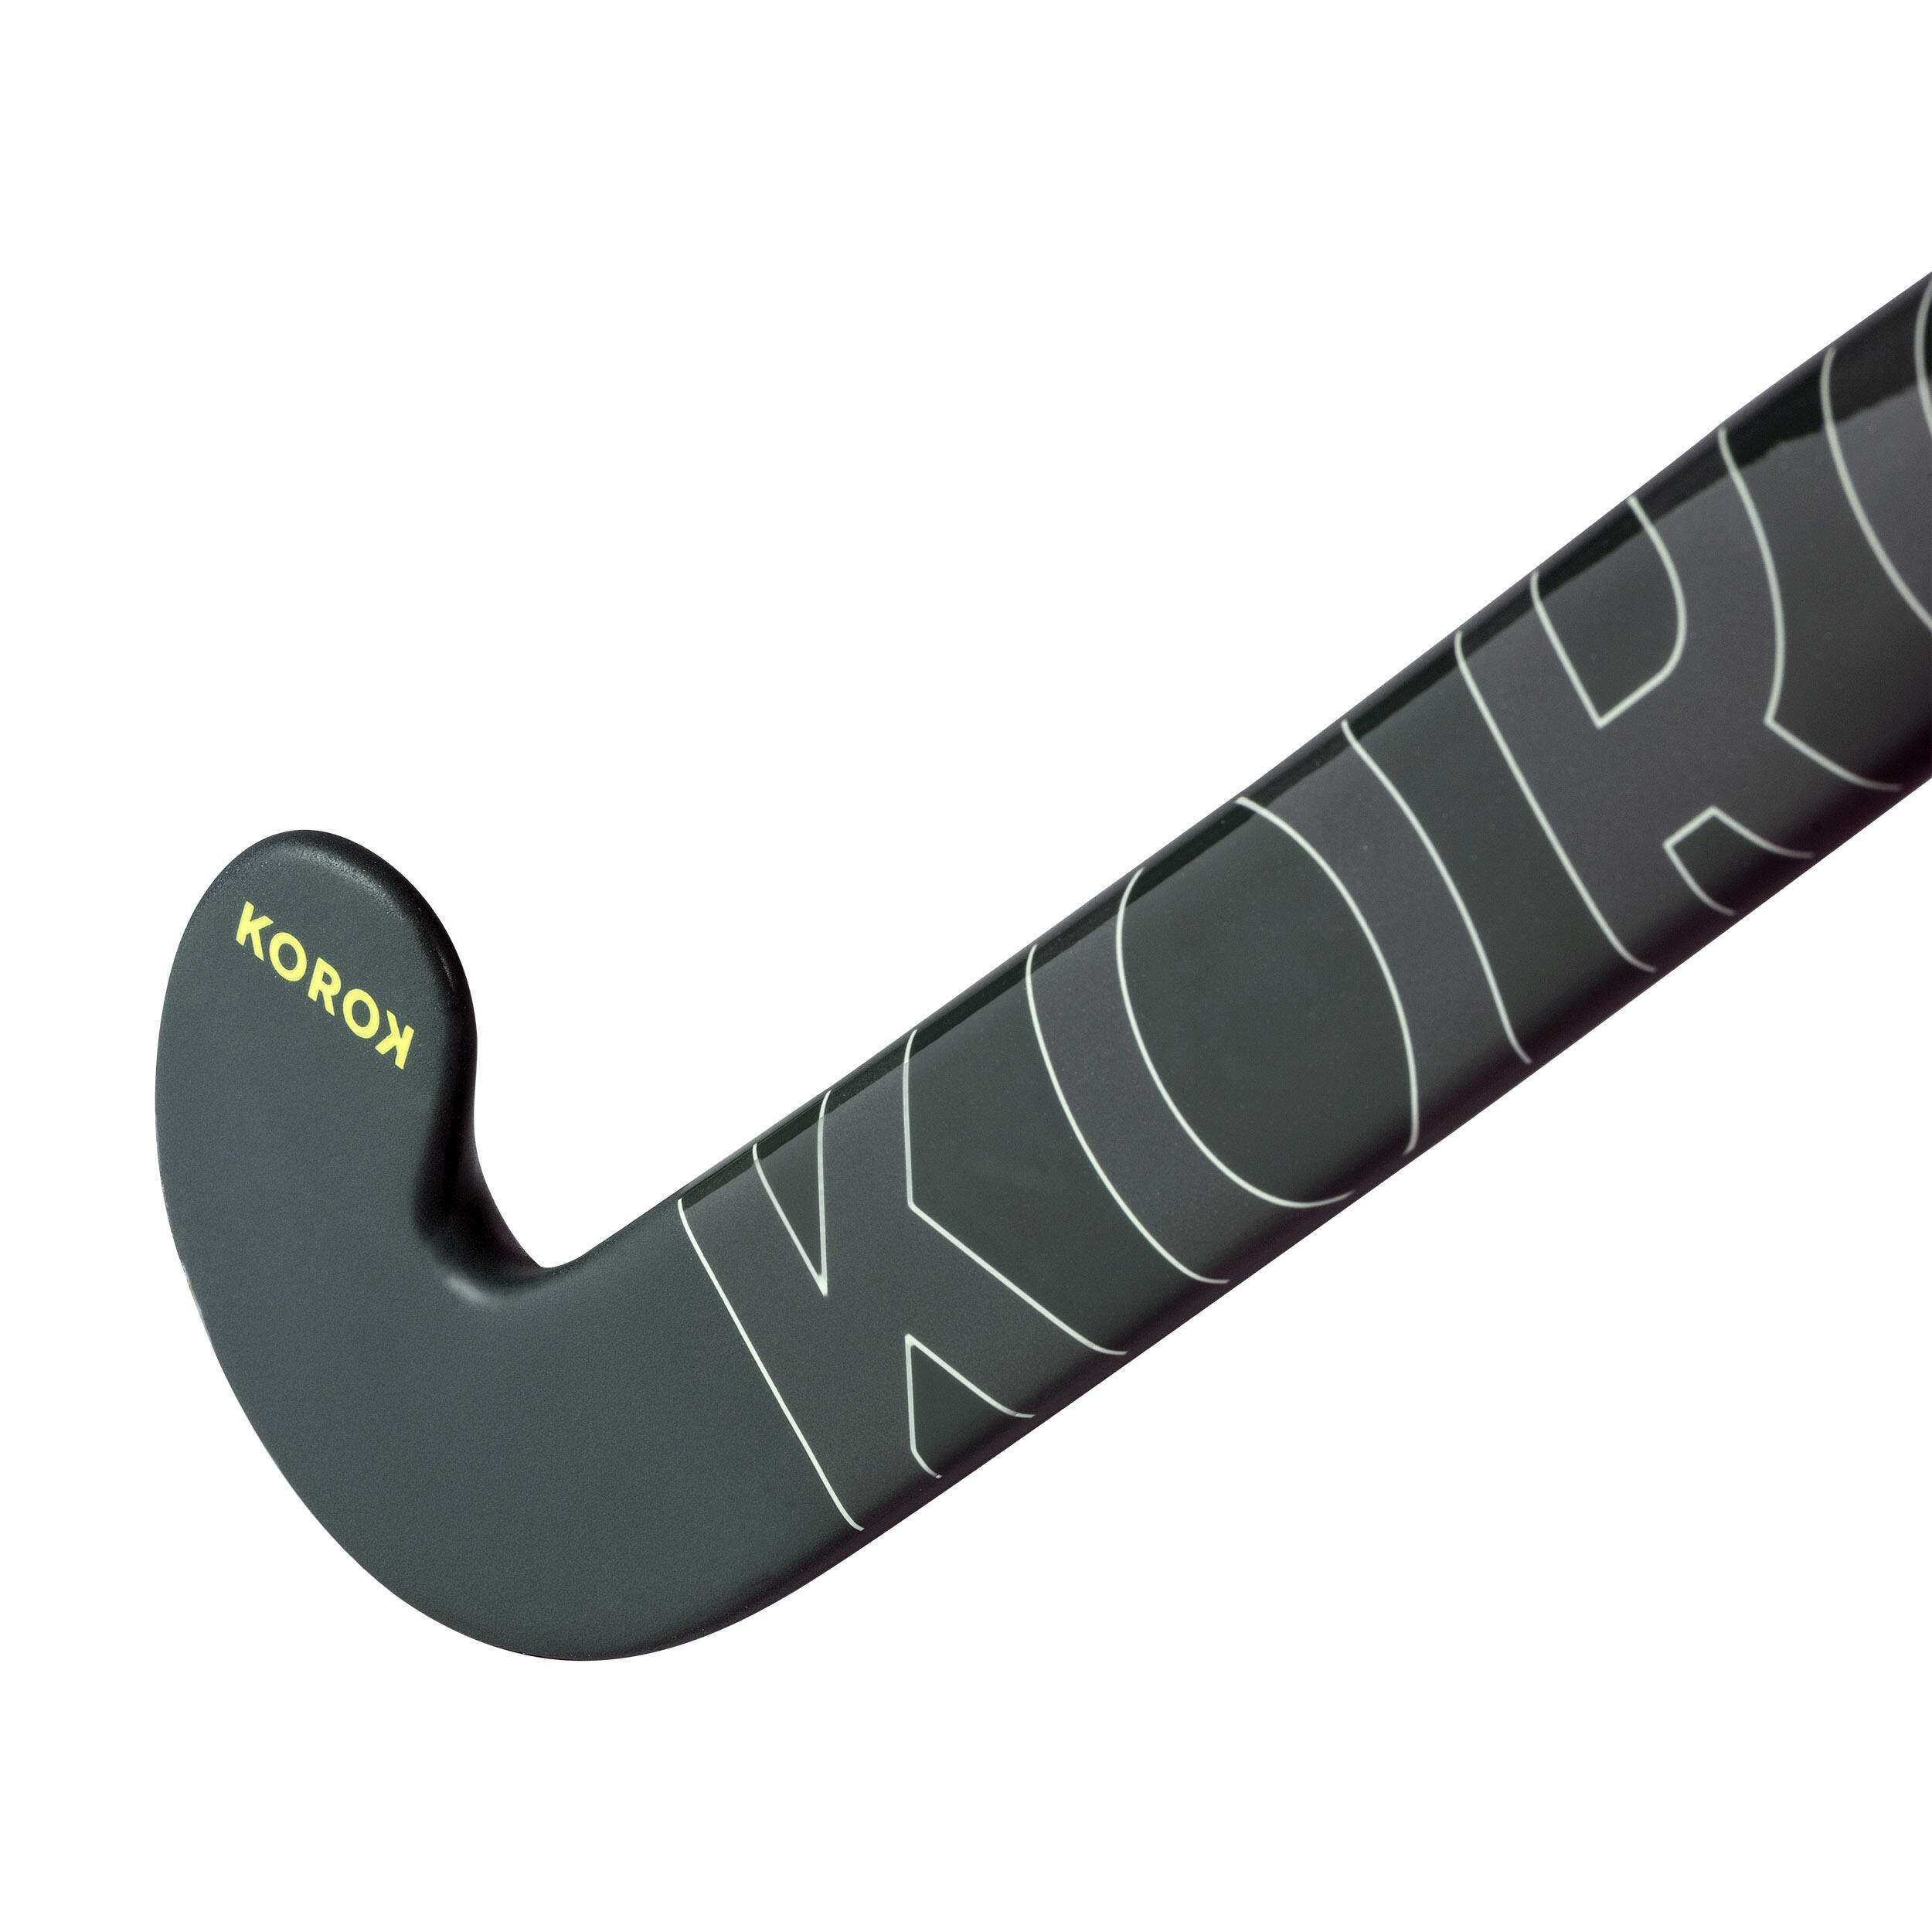 Adult Intermediate 30% Carbon Mid Bow Field Hockey Stick FH530 - Khaki/Black 2/12